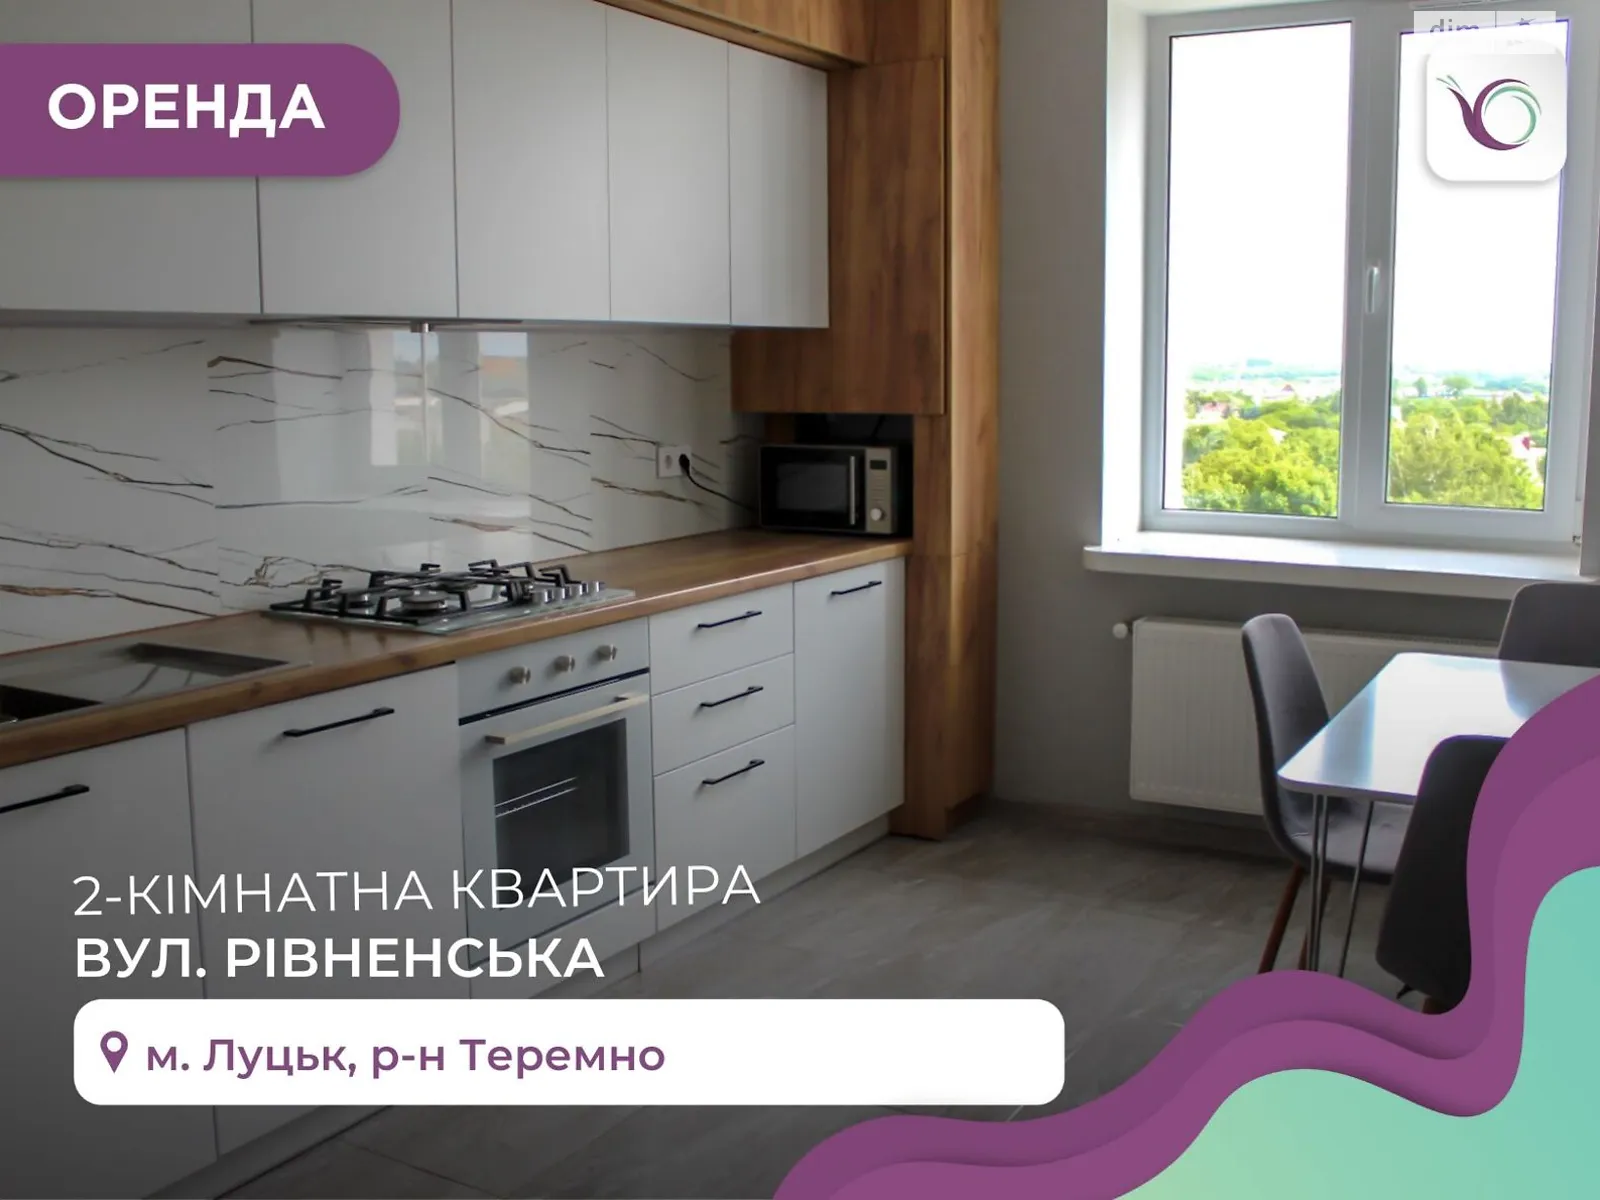 2-кімнатна квартира 63 кв. м у Луцьку, цена: 15000 грн